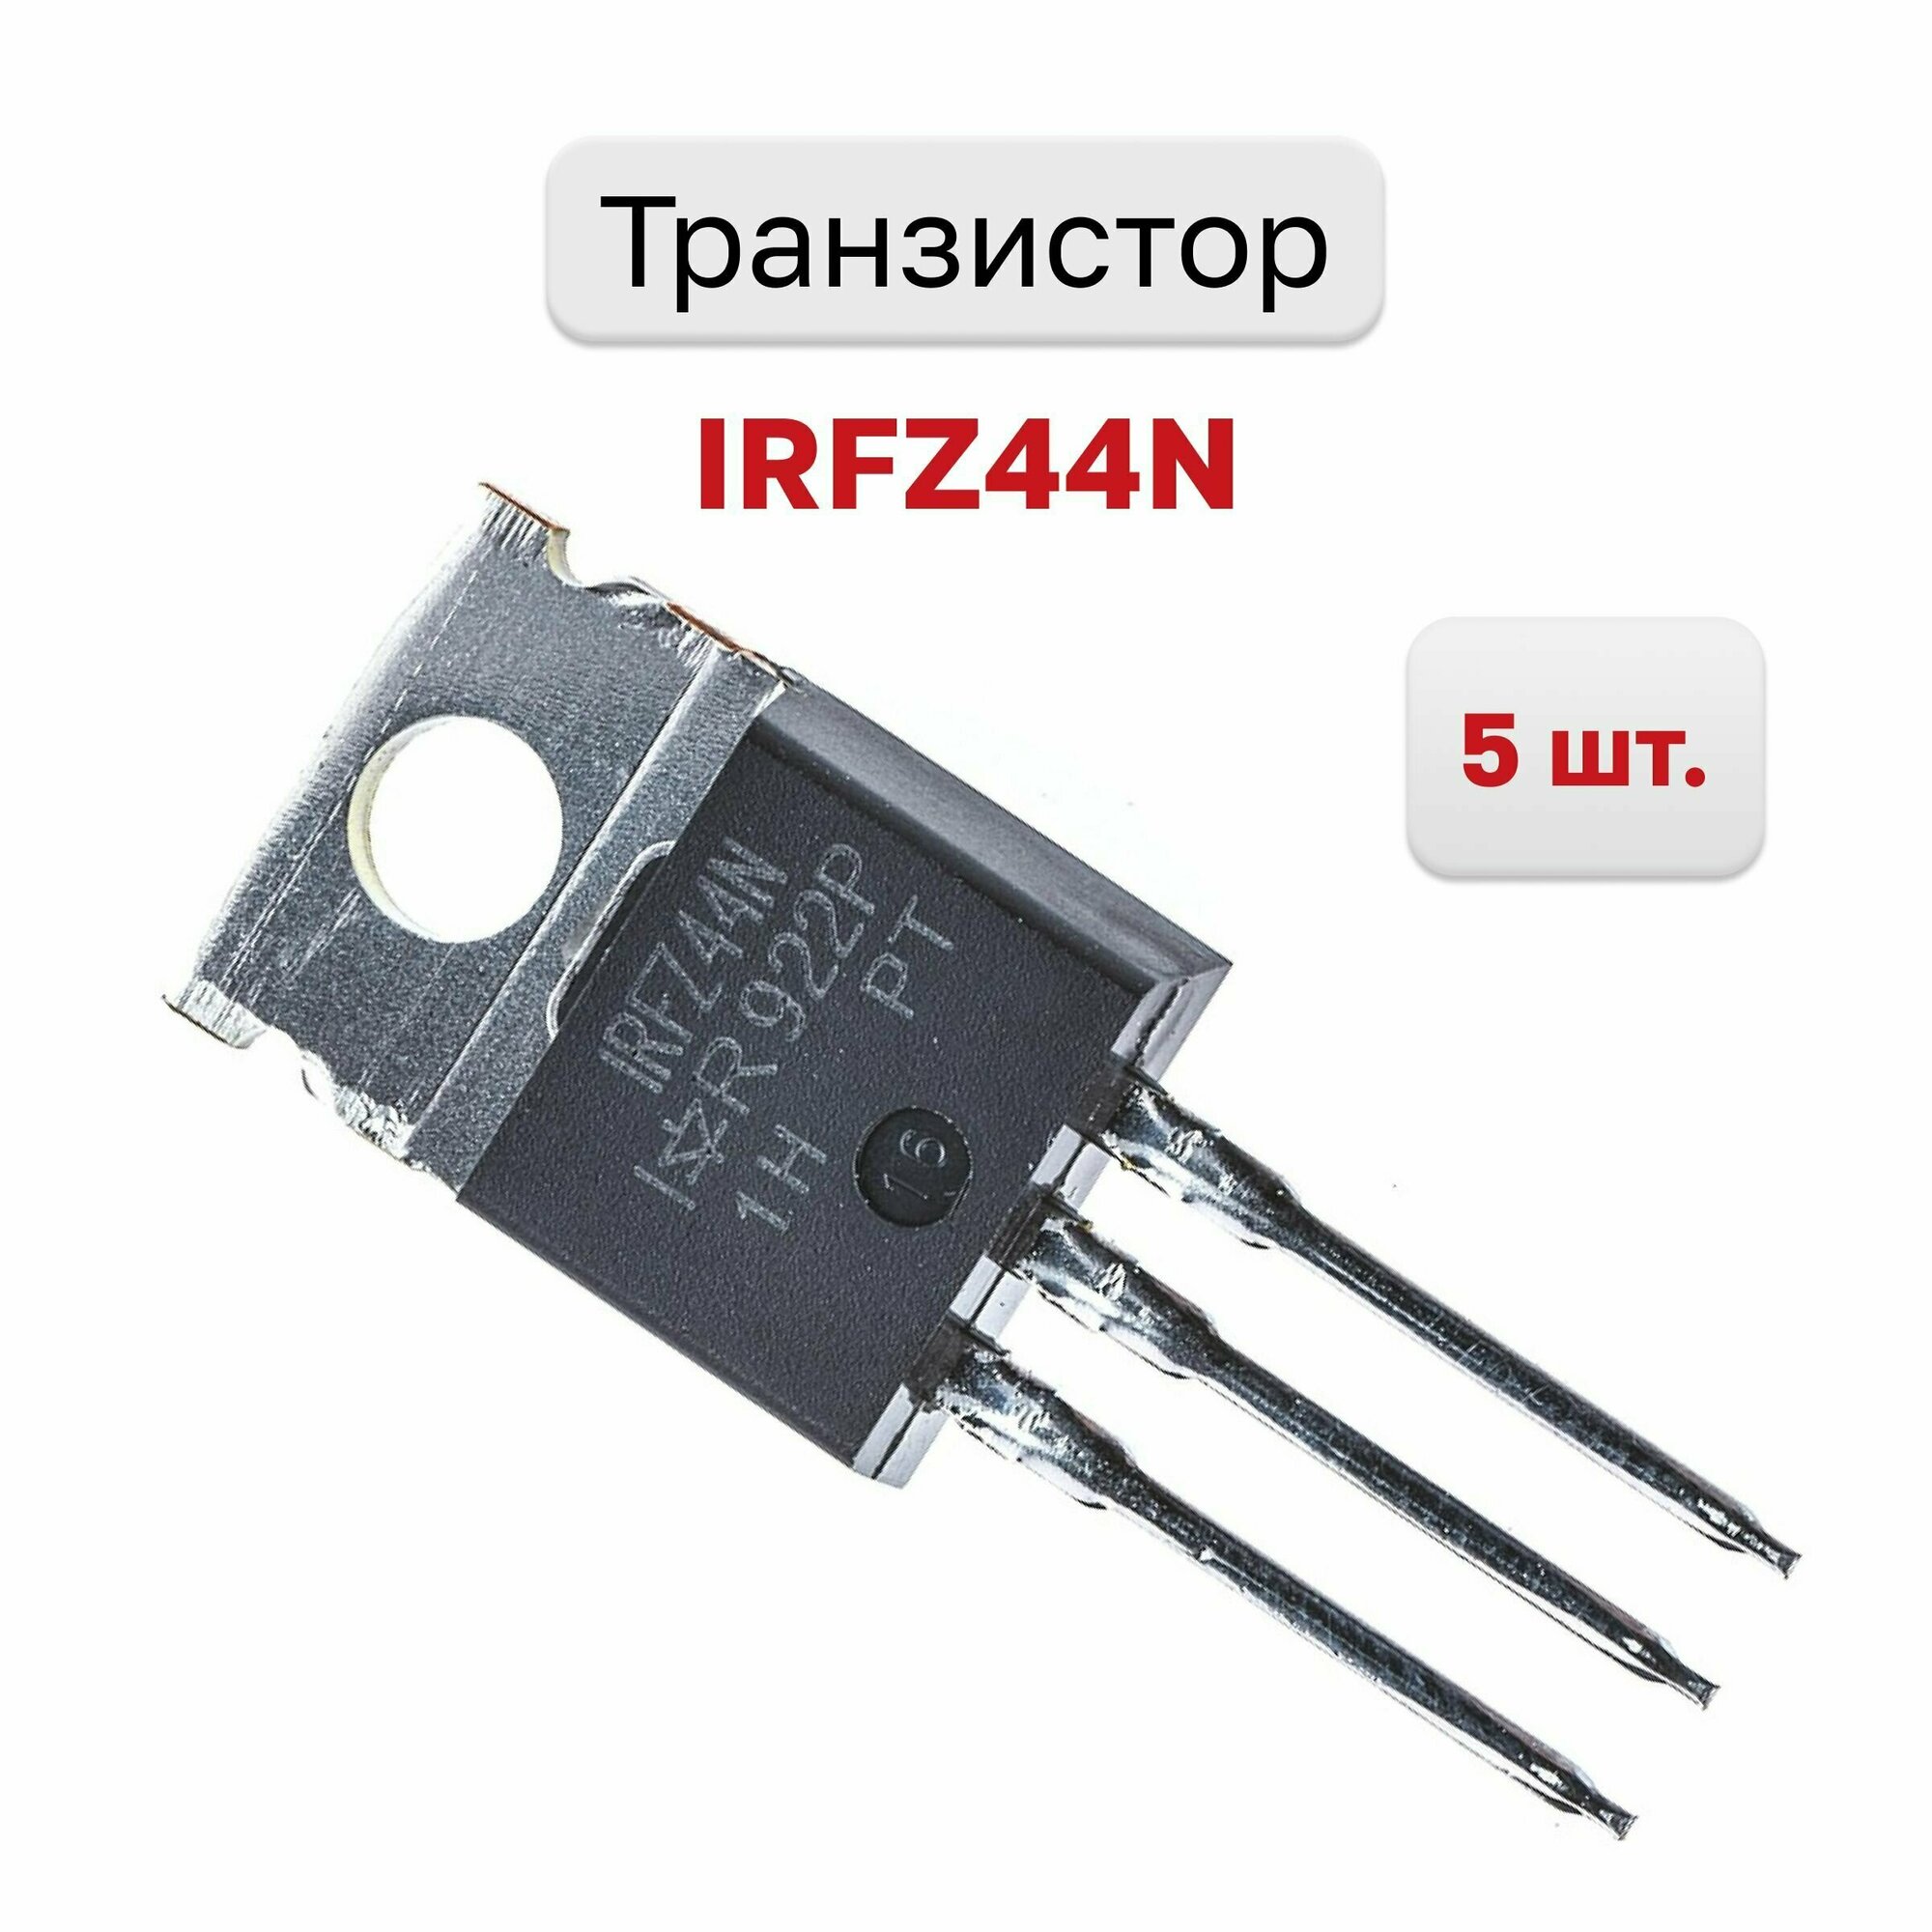 Транзистор IRFZ44N